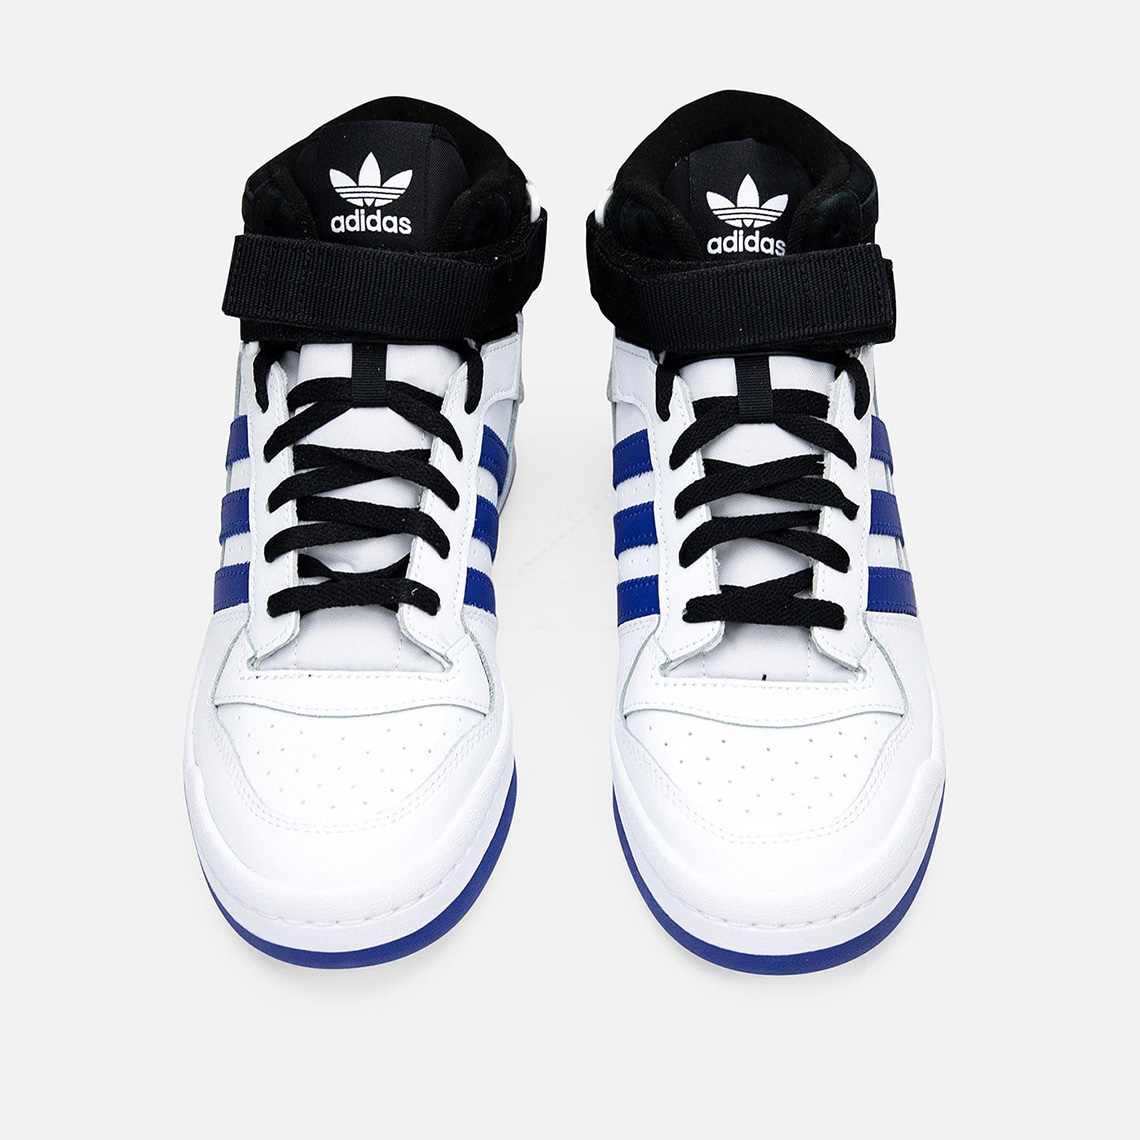 Adidas high Forum Mid White Blue Black Fy6796 3